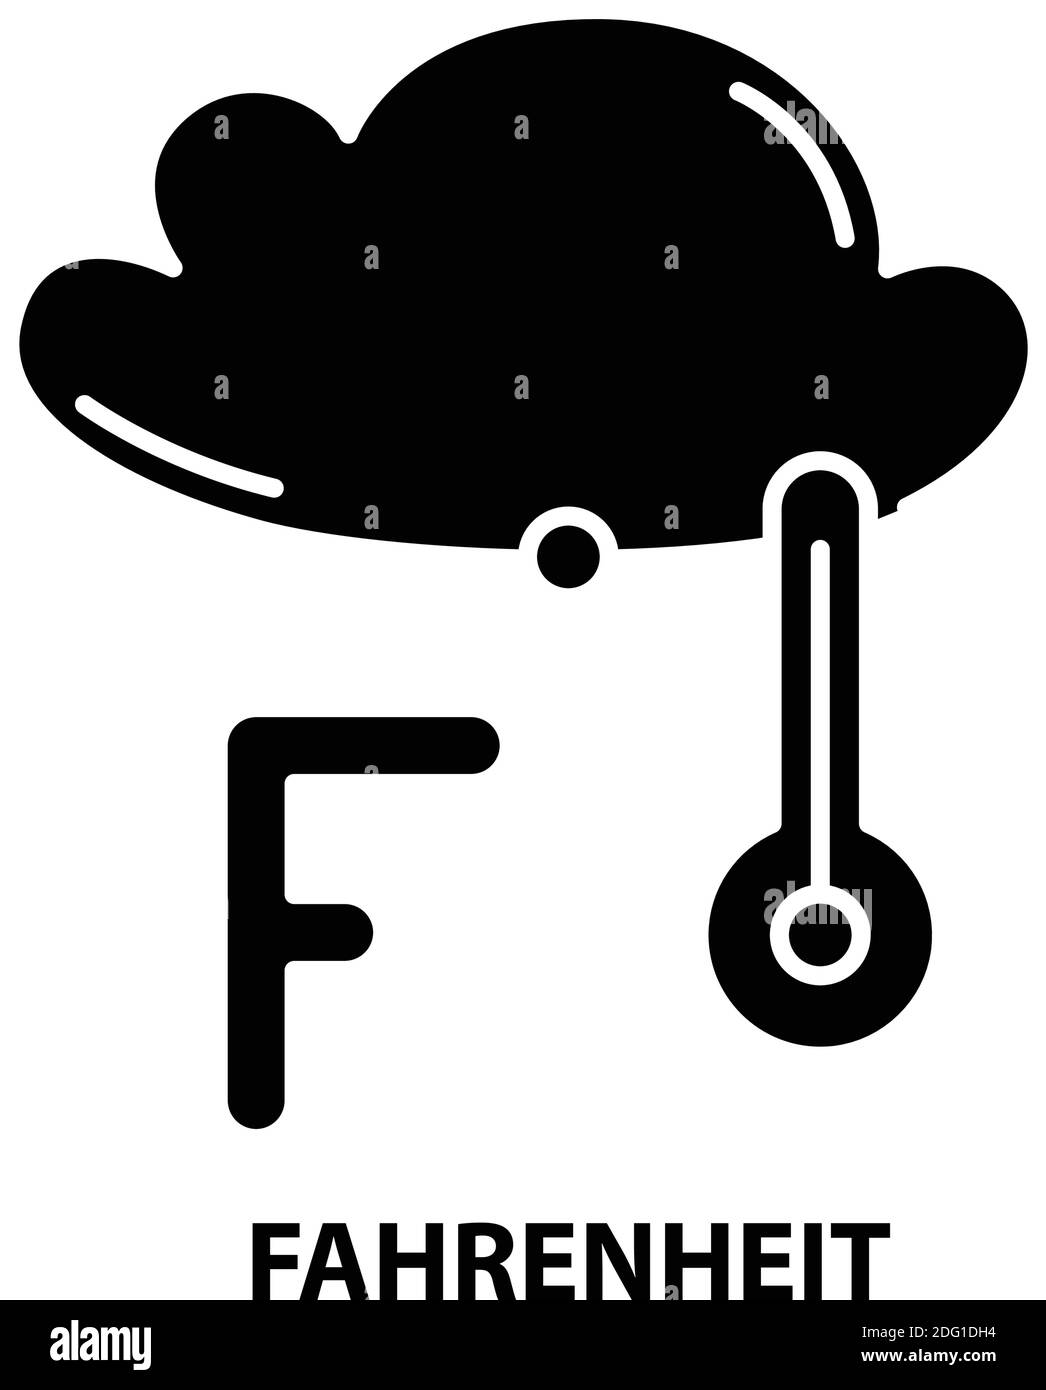 fahrenheit icon, black vector sign with editable strokes, concept illustration Stock Vector